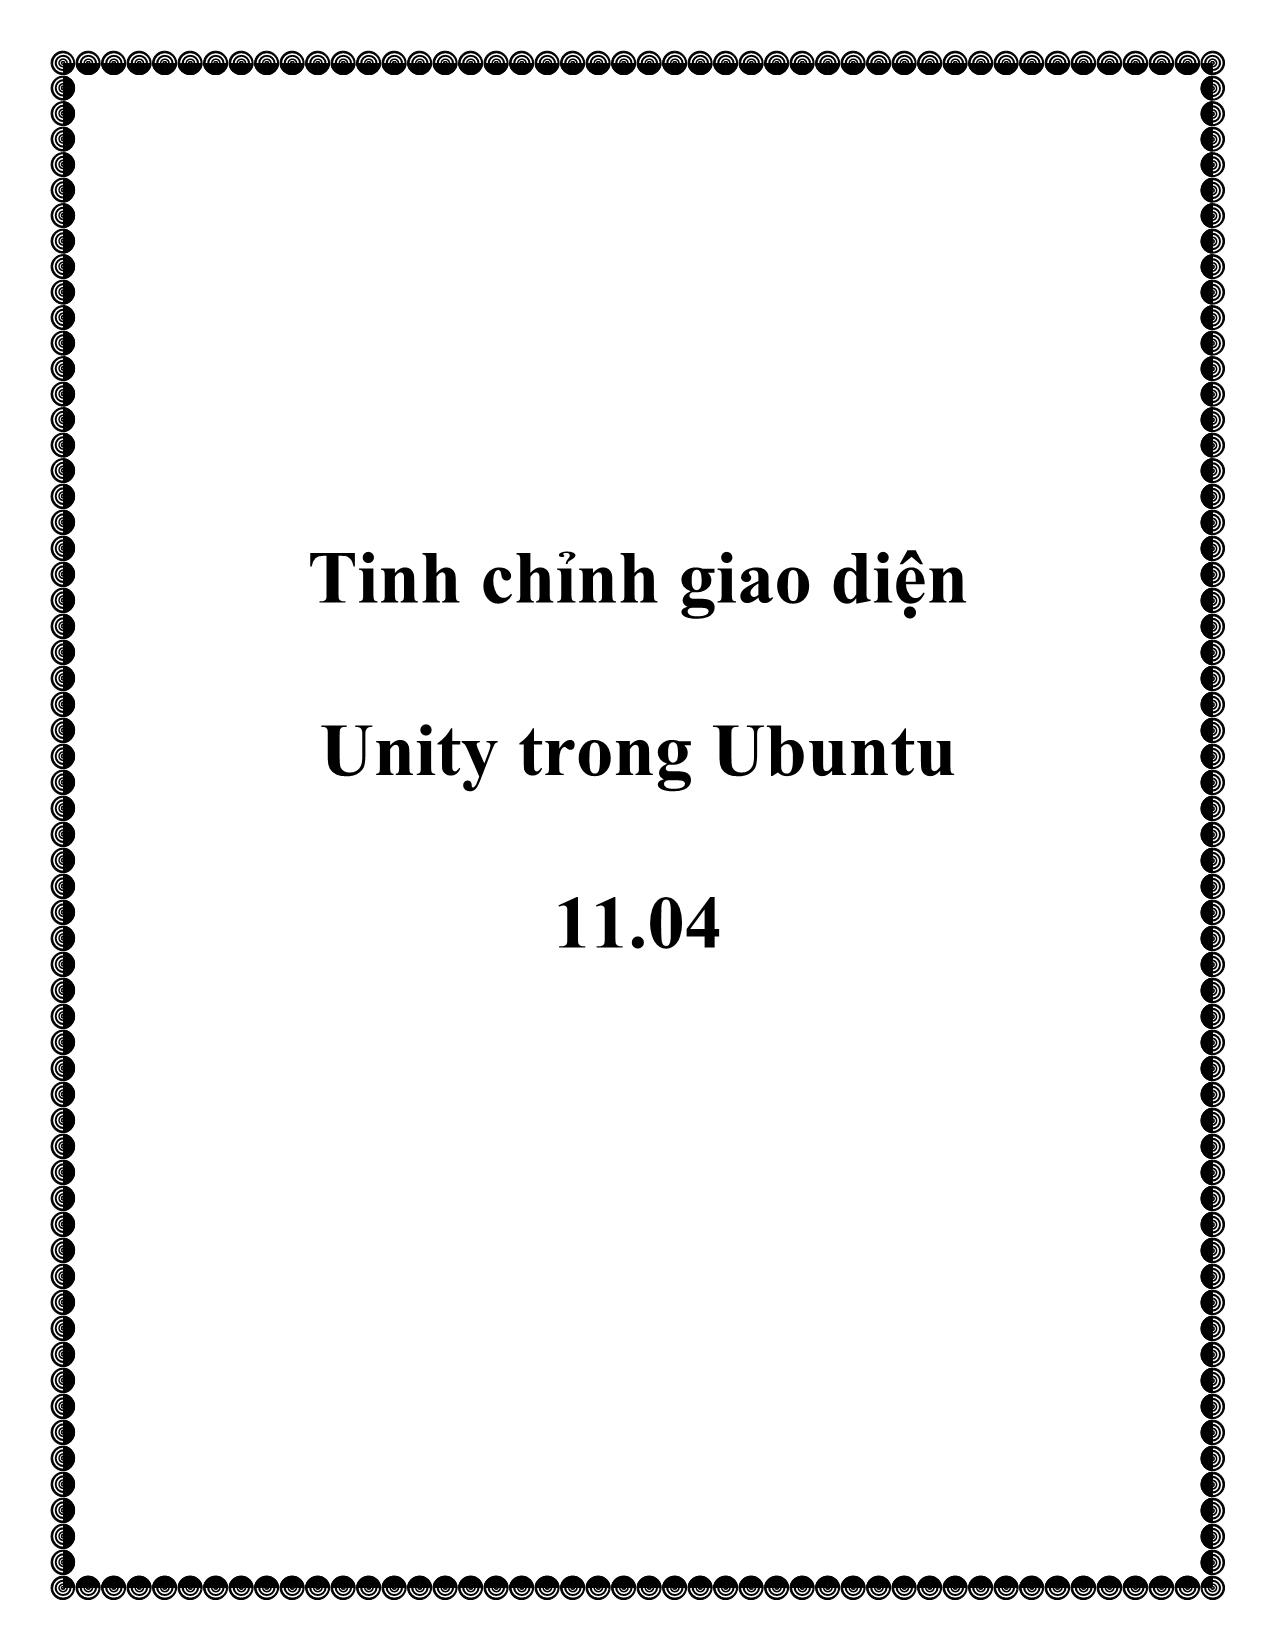 Tinh chỉnh giao diện Unity trong Ubuntu 11.04 trang 1